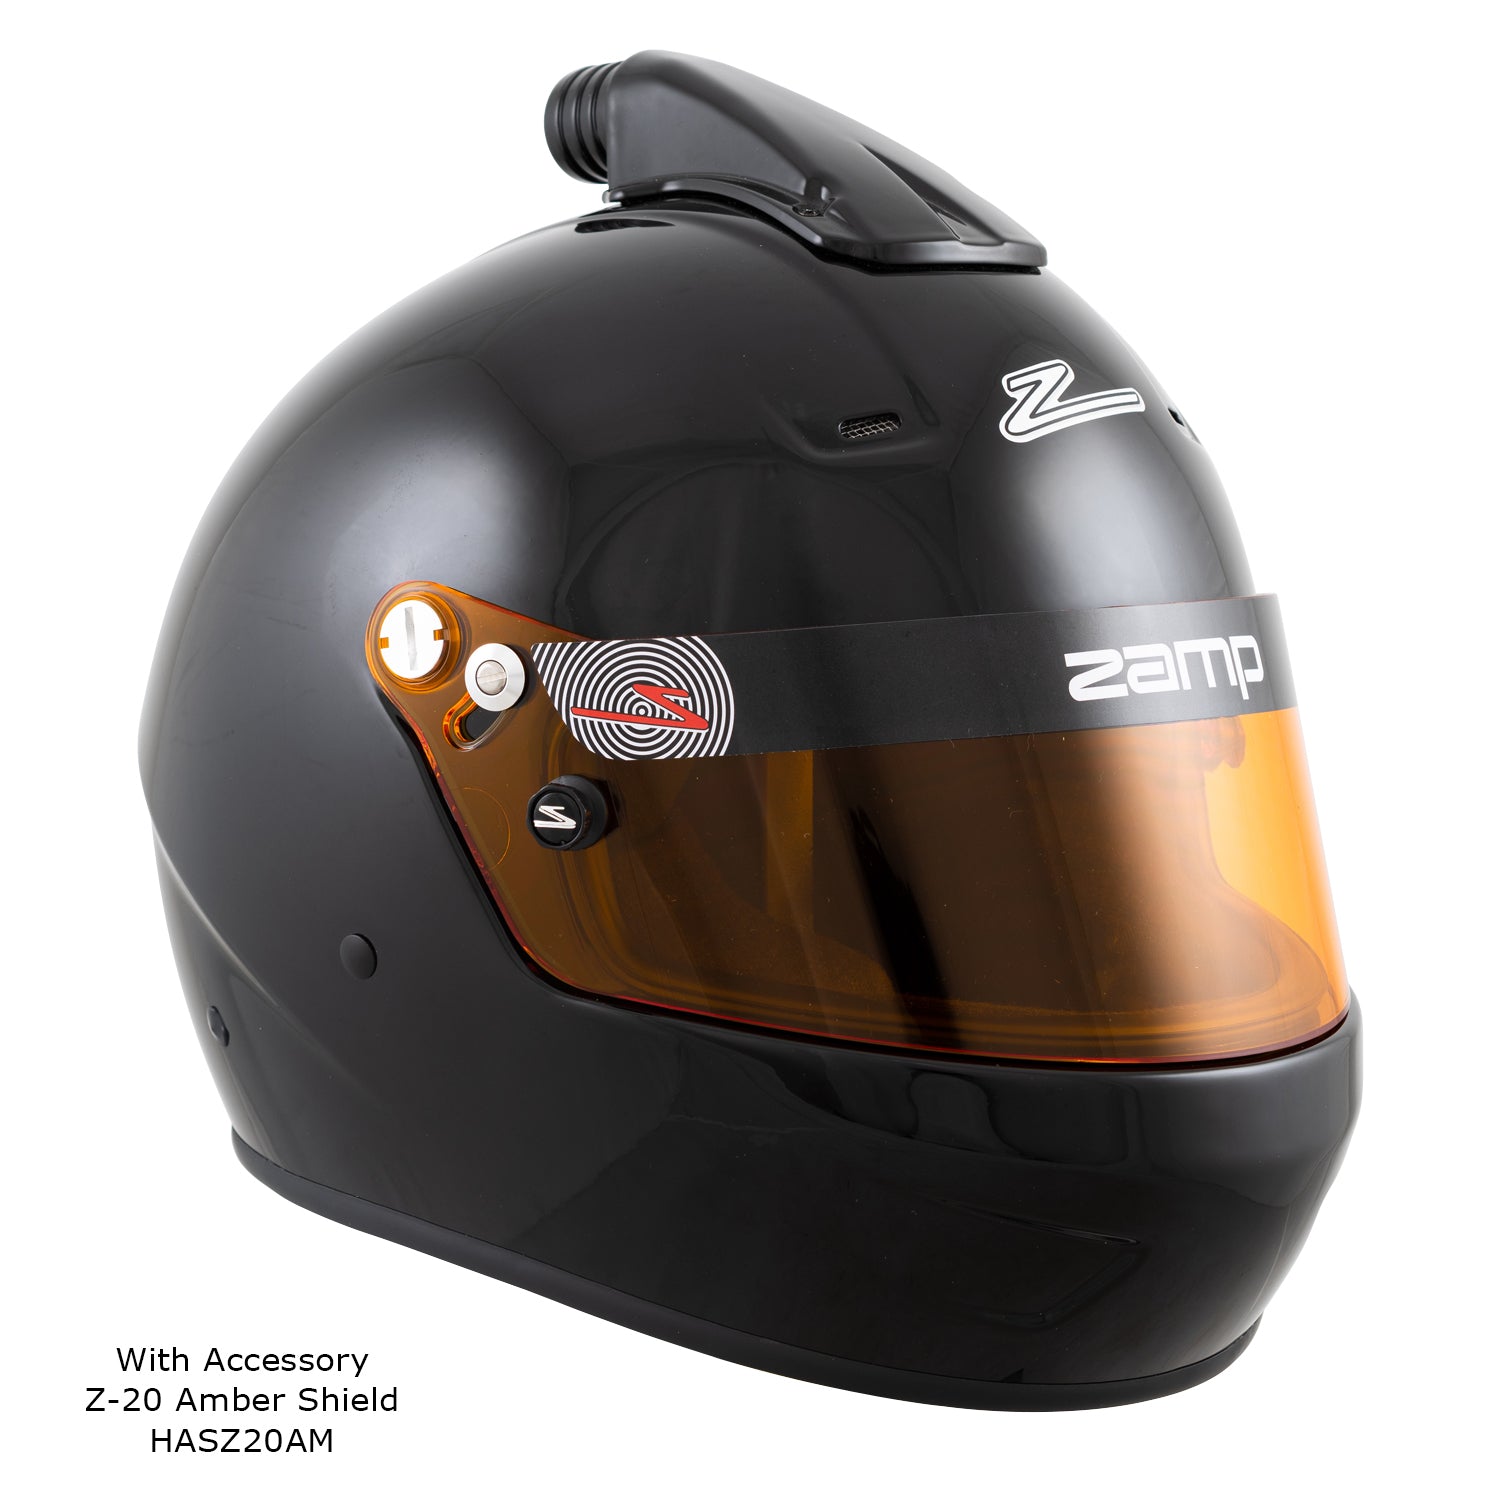 Zamp RZ-56 Air Helmet, Snell SA-2020